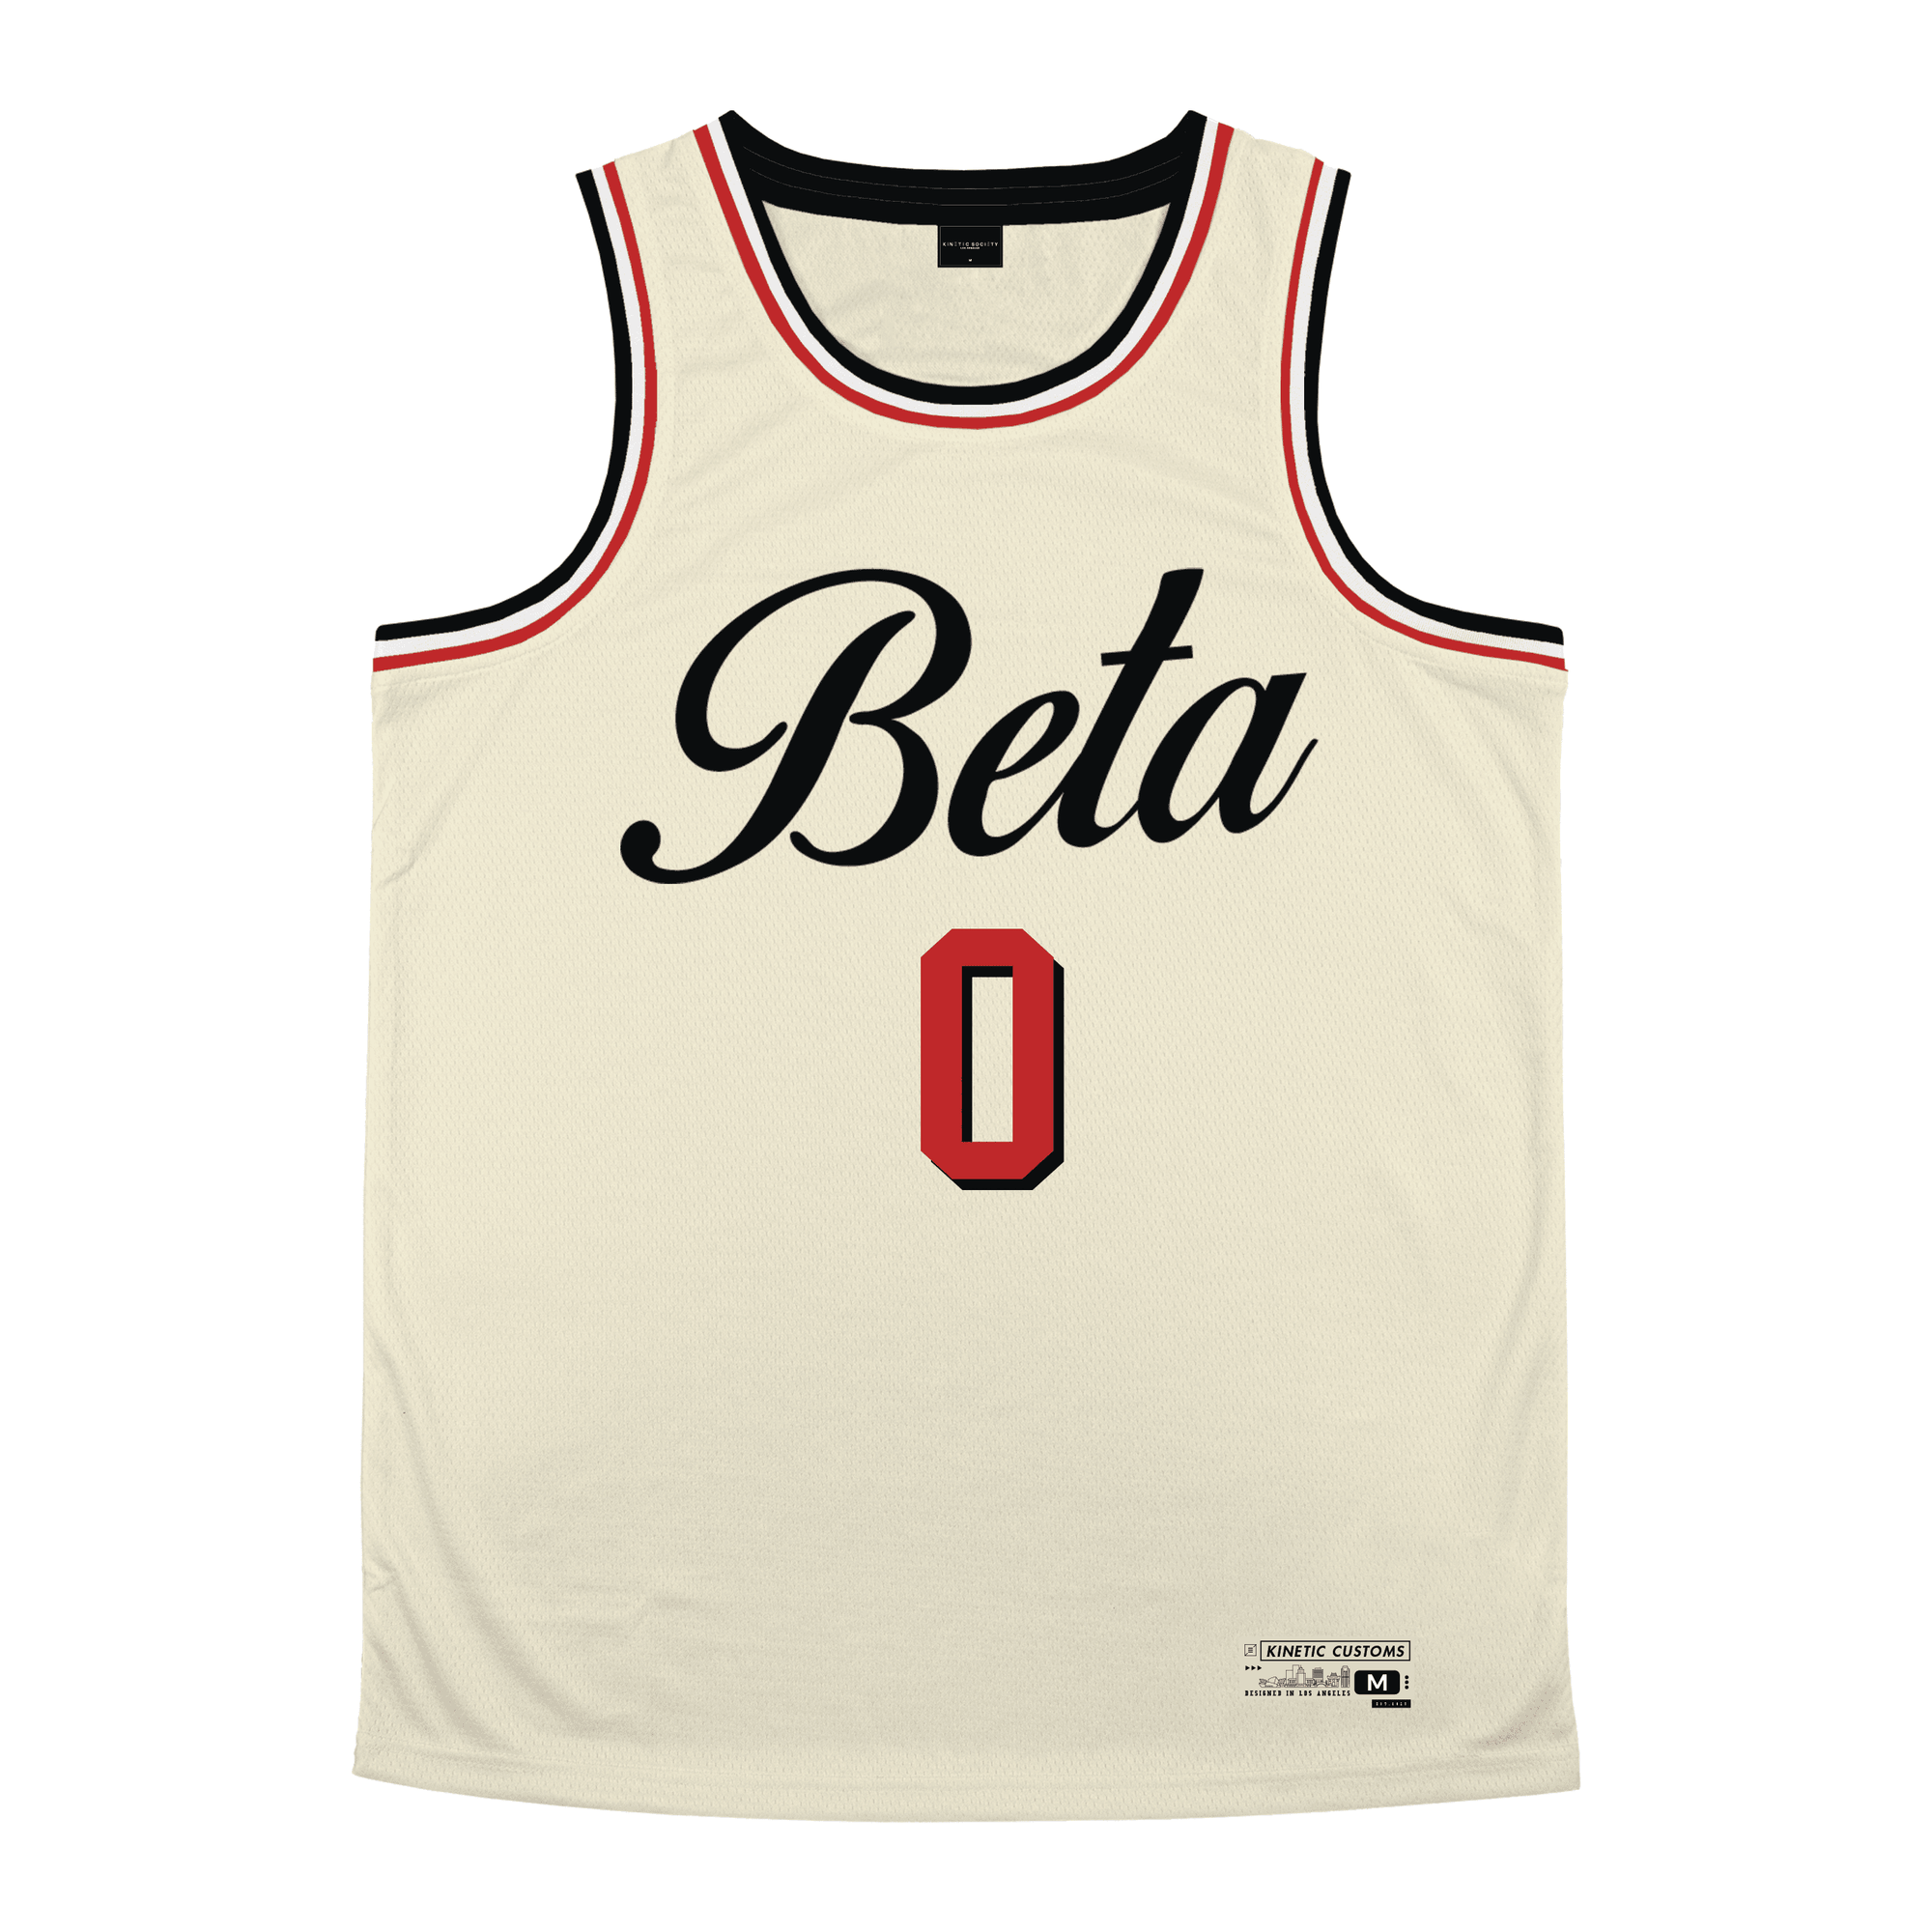 Beta Theta Pi - VIntage Cream Basketball Jersey